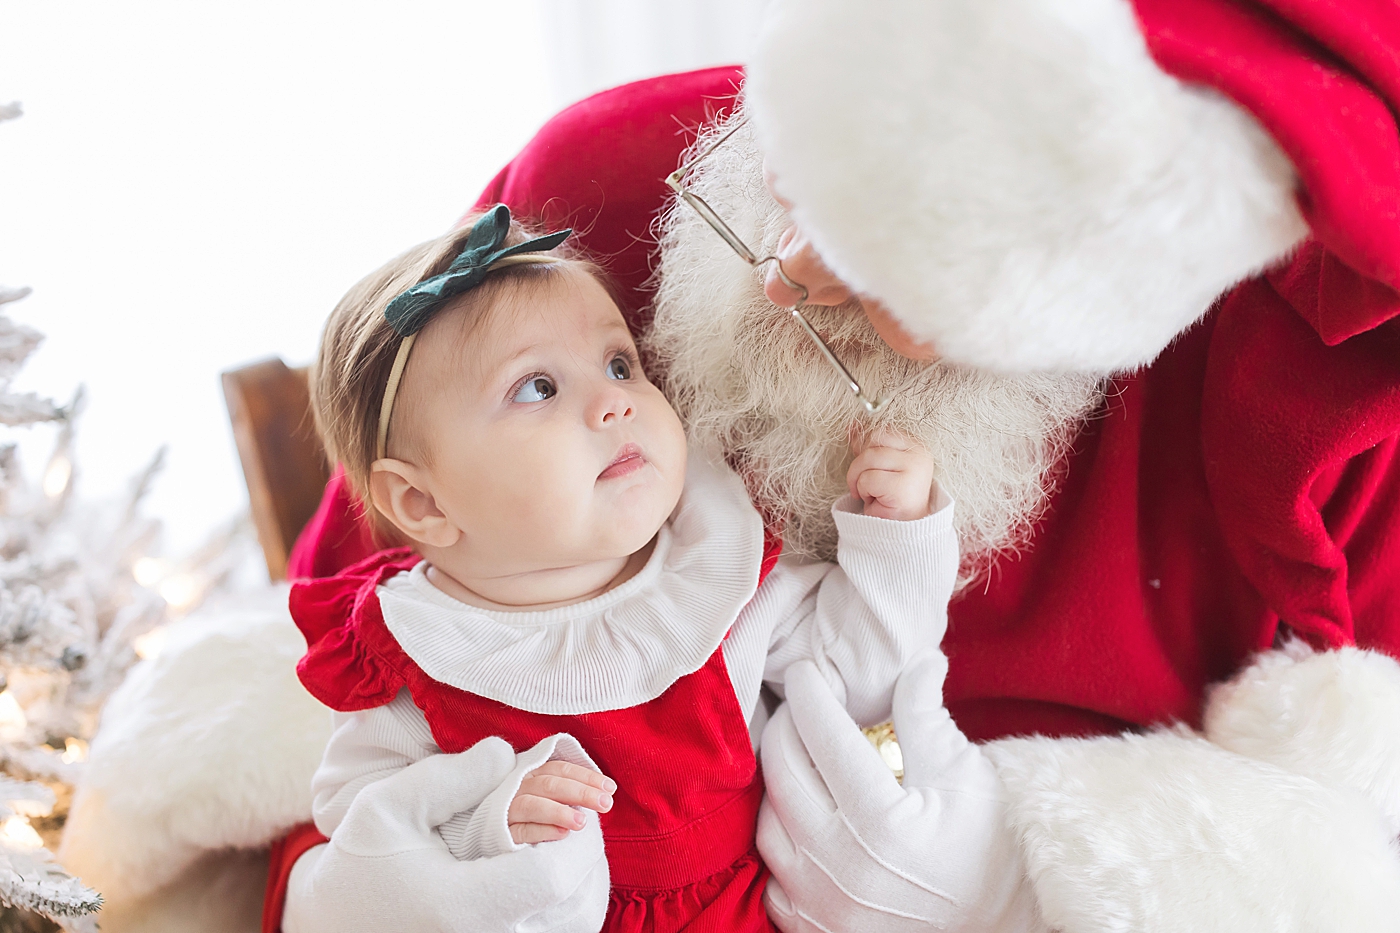 Baby girl pulling on Santa's beard. Photo by Fresh Light Photography.